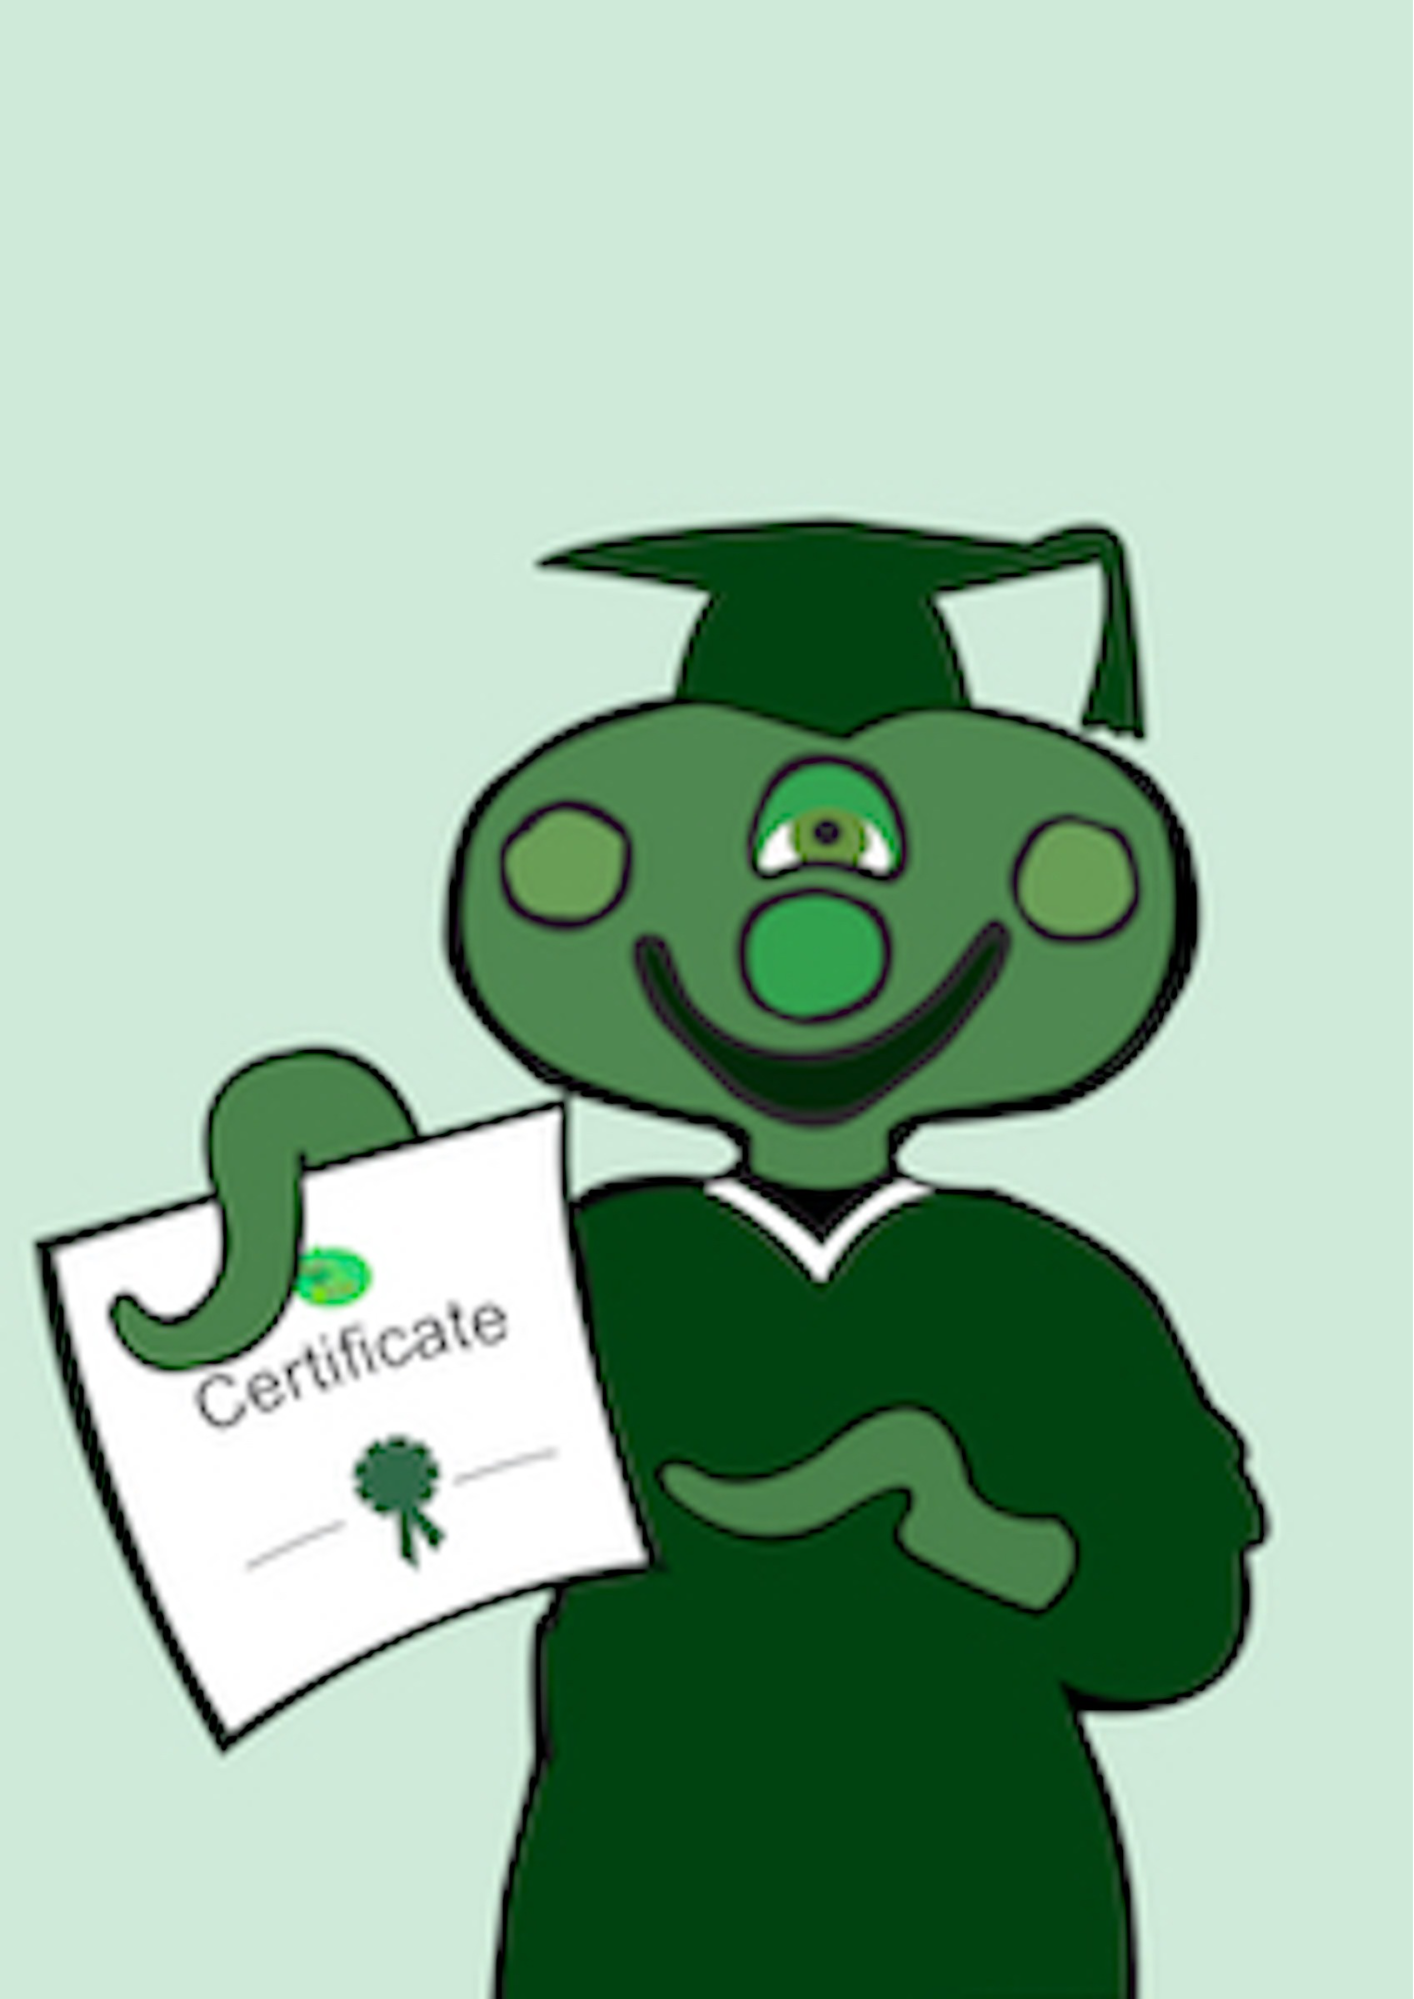 certificate shop image